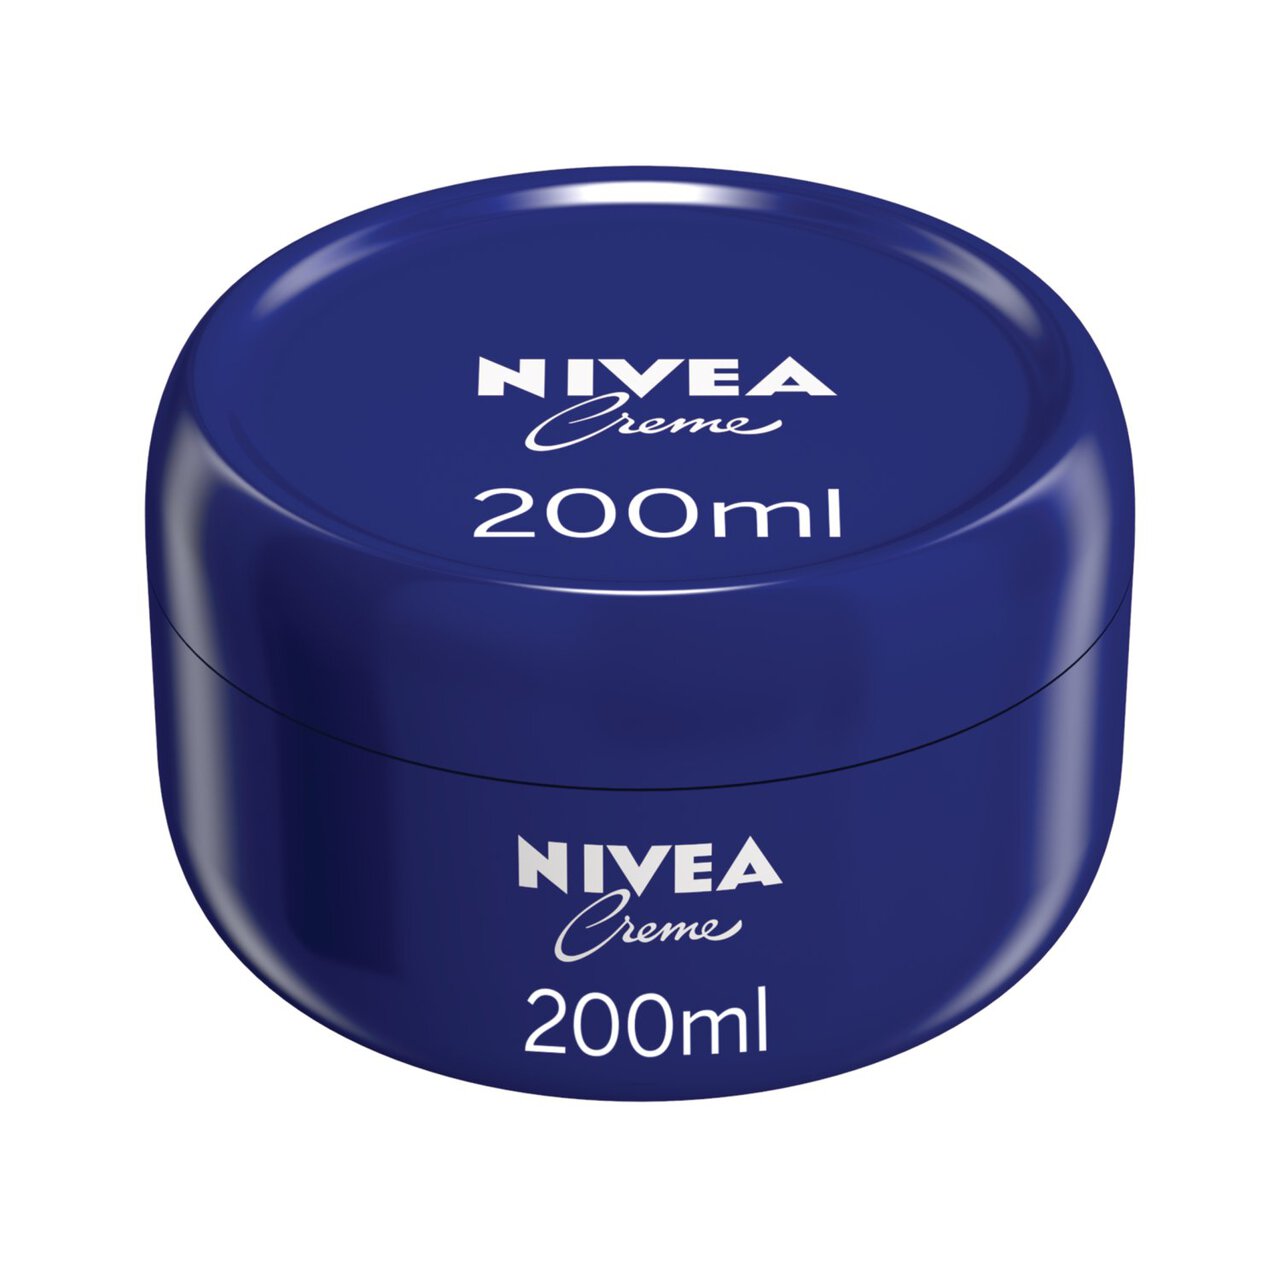 NIVEA Creme Moisturiser Cream for face, hands and body, 200ml 200ml